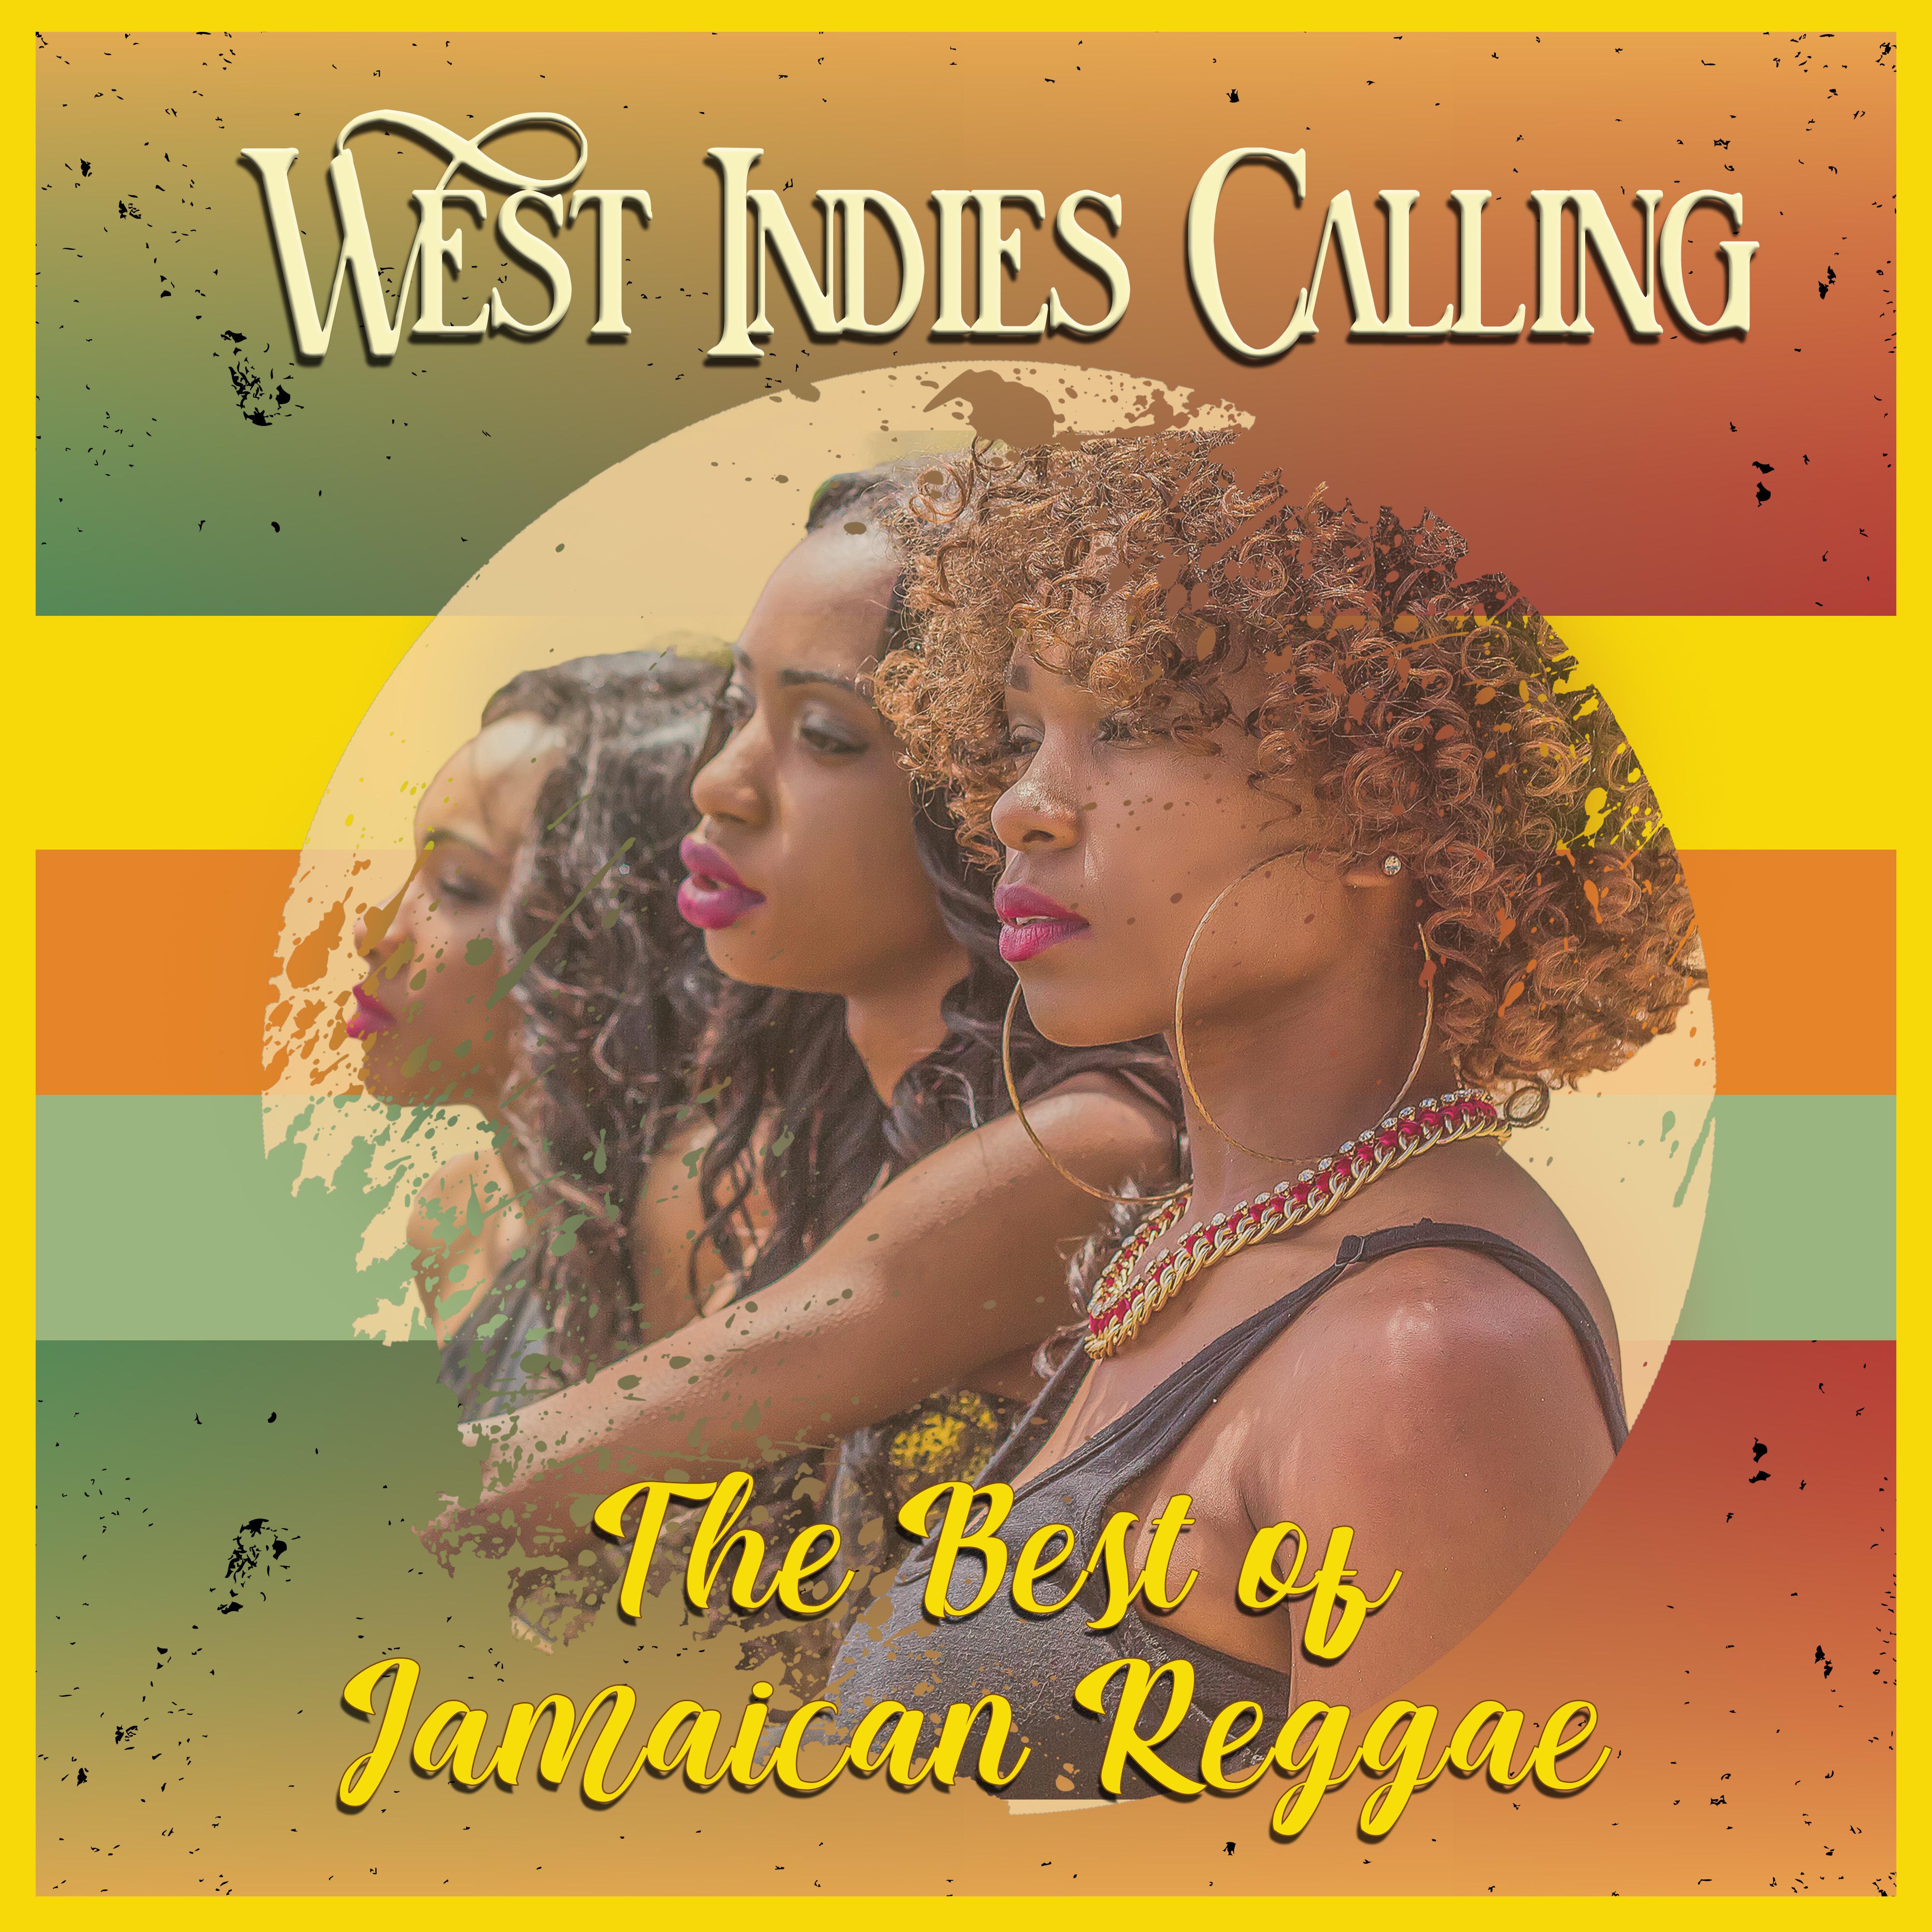 West Indies Calling - The Best of Jamaican Reggae